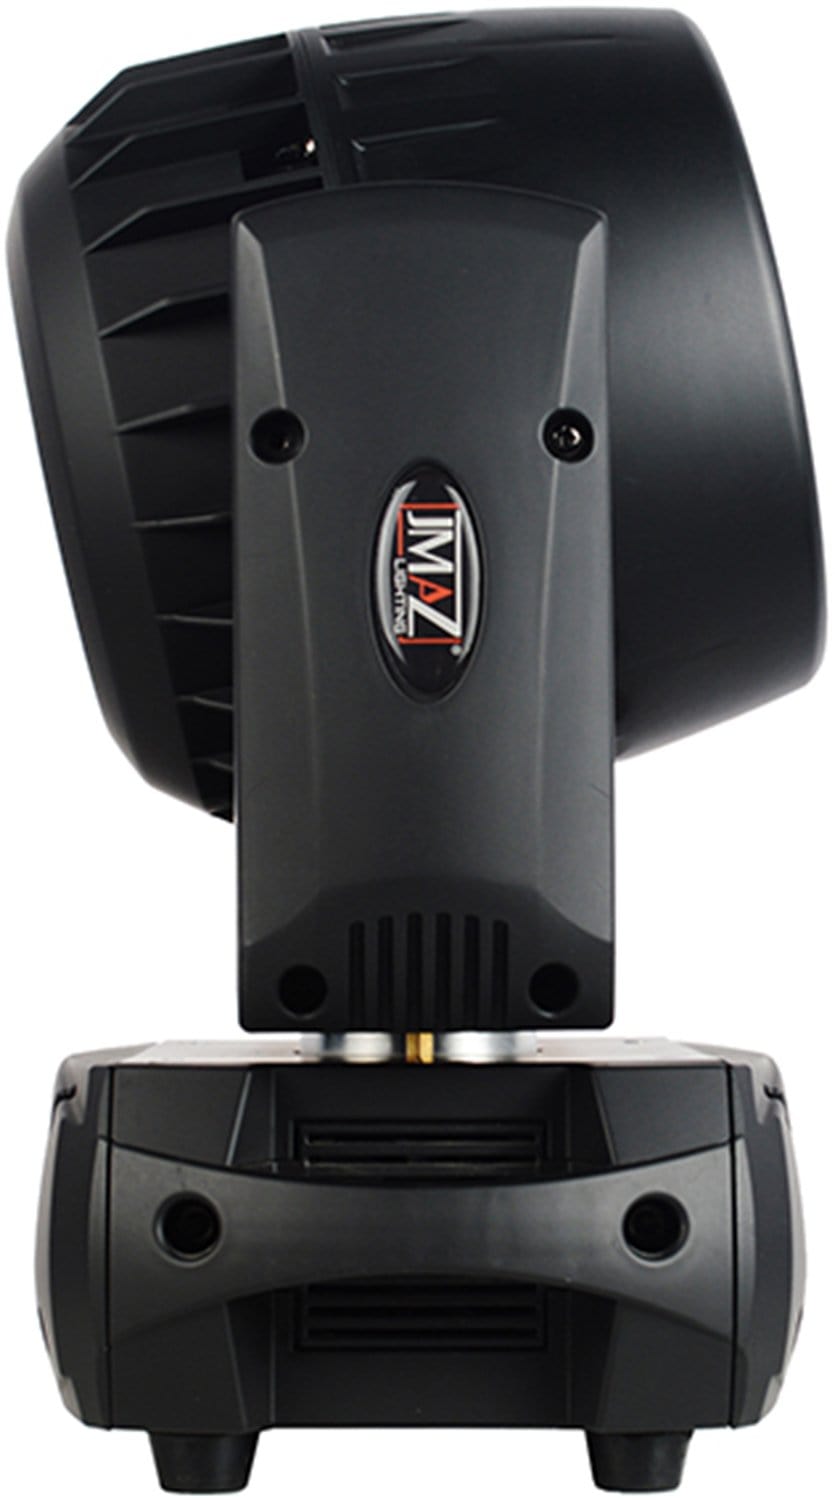 JMAZ Attco Wash 150Z 210w RGBW LED Moving Head - ProSound and Stage Lighting